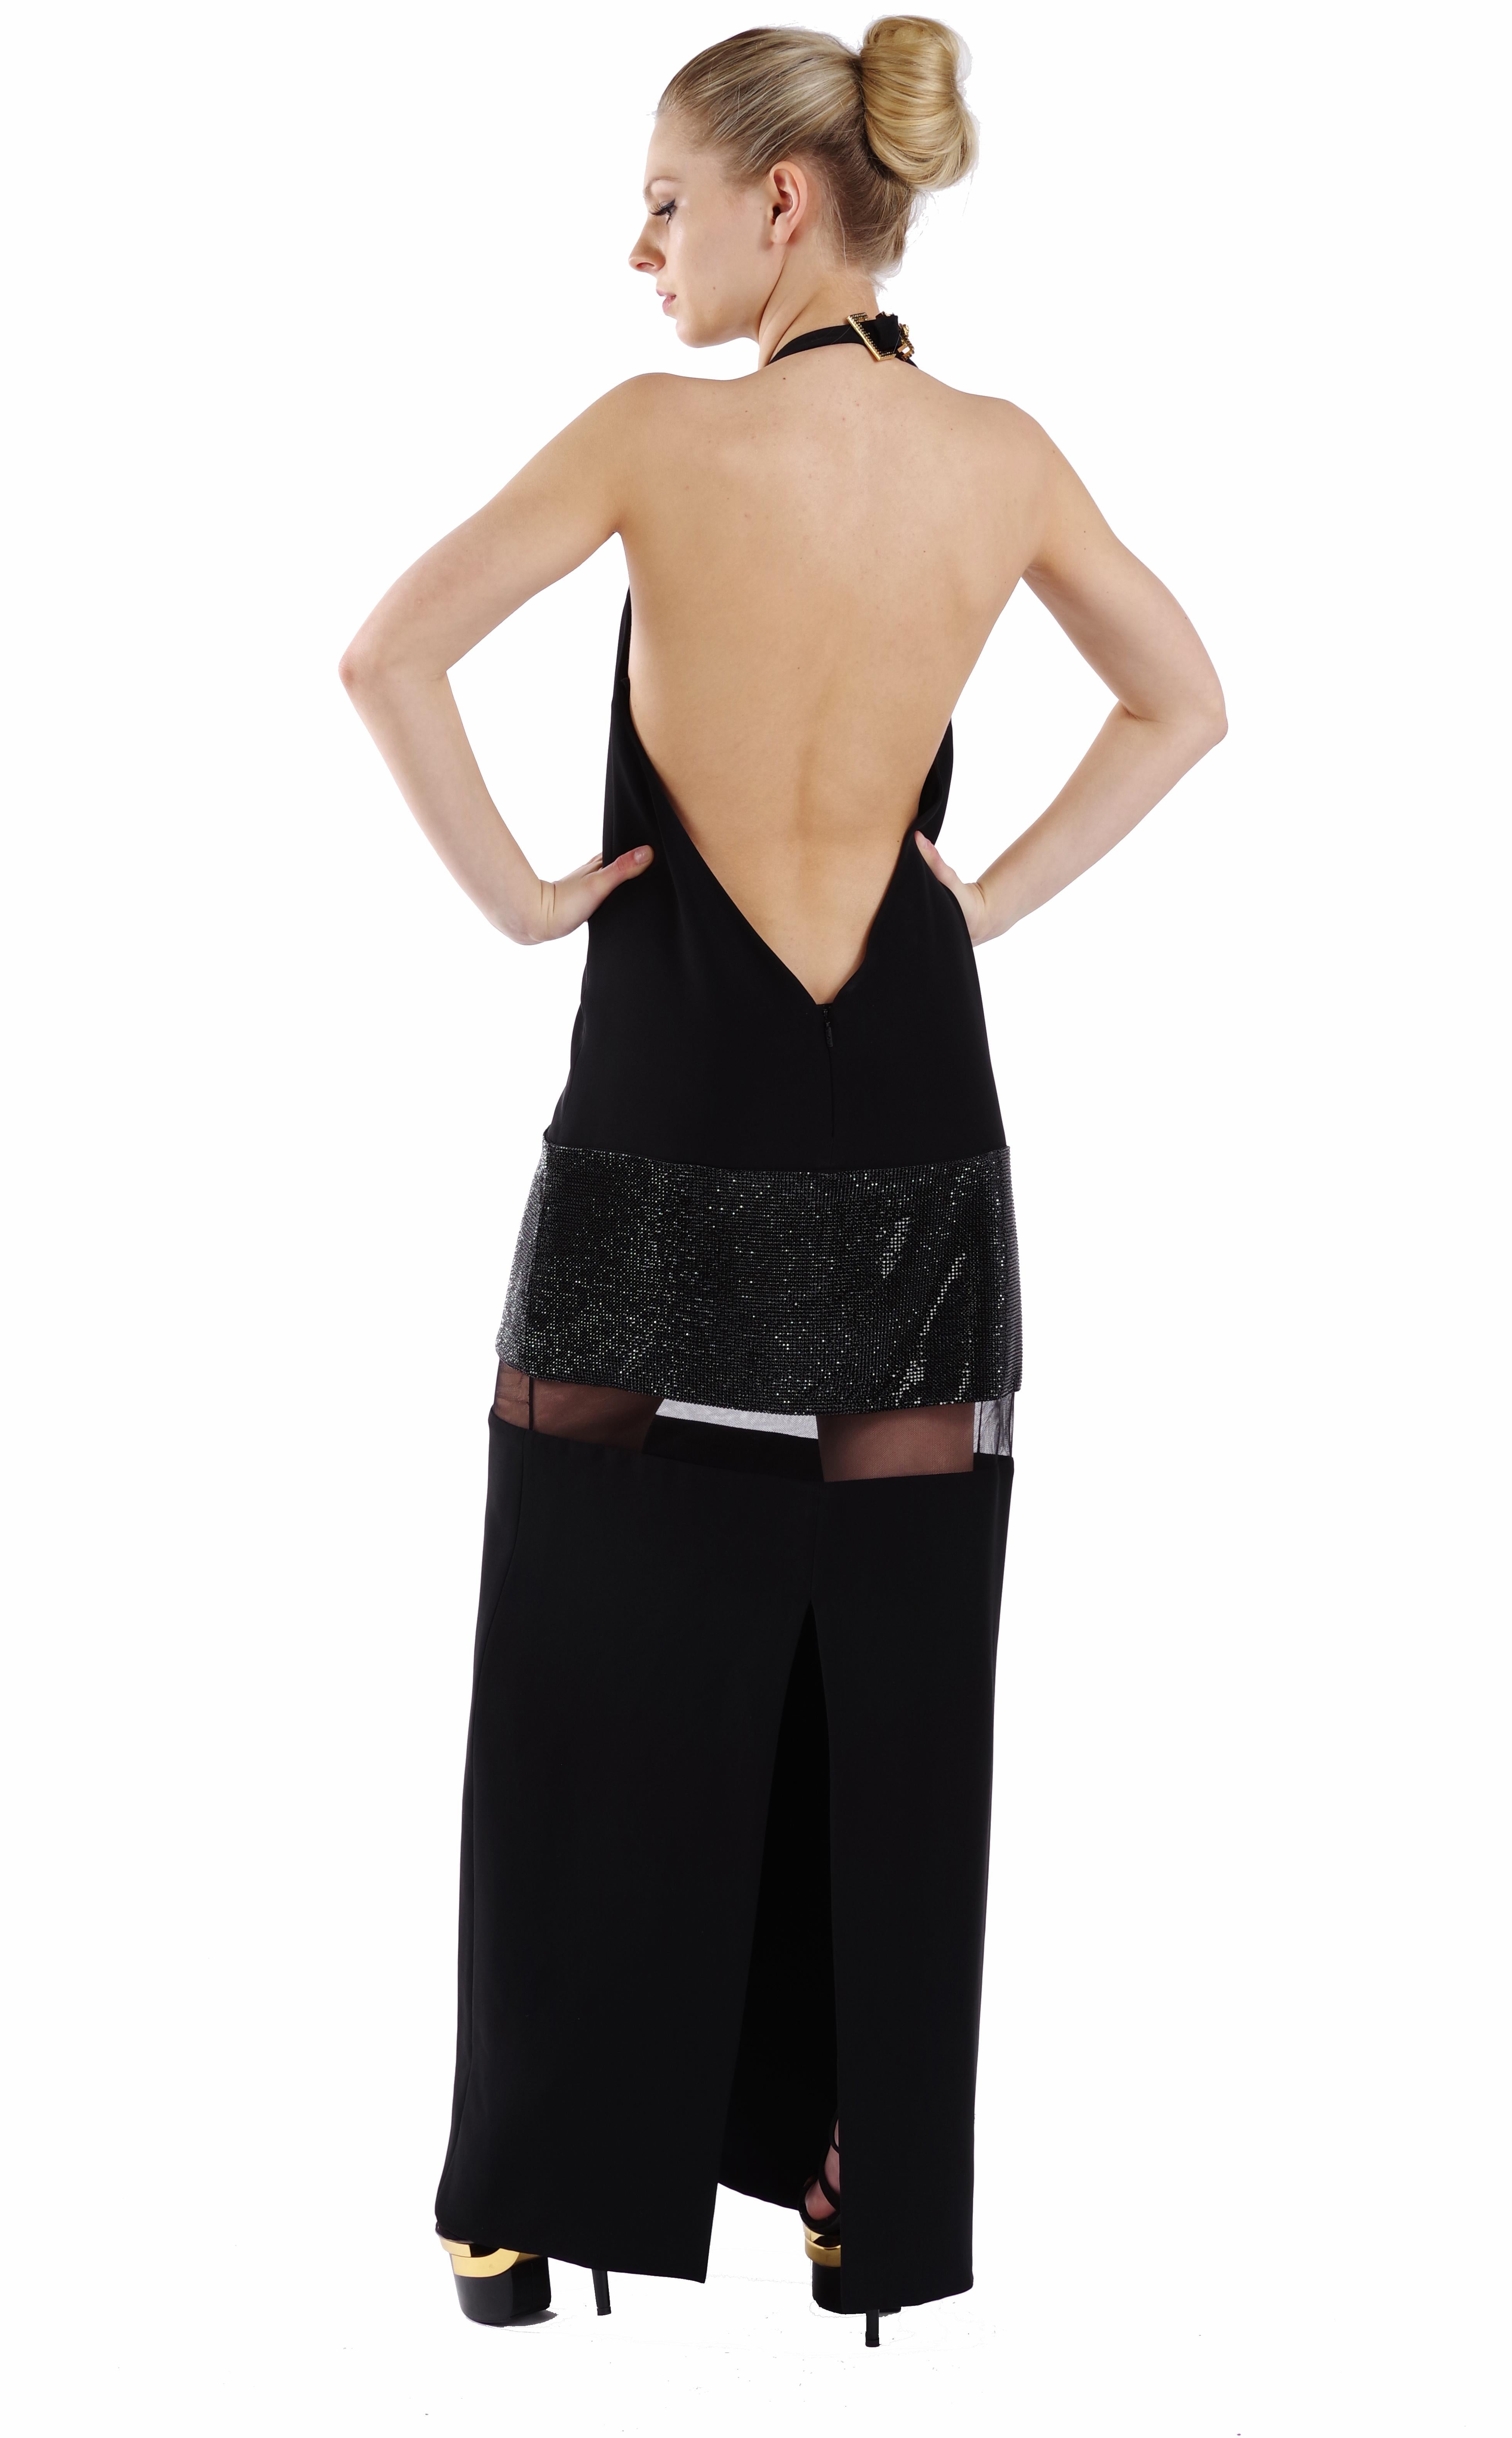 S/S 2015 look # 42 NEW VERSACE CRYSTAL MESH MBELLISHED BLACK LONG DRESS  42 - 6 For Sale 1